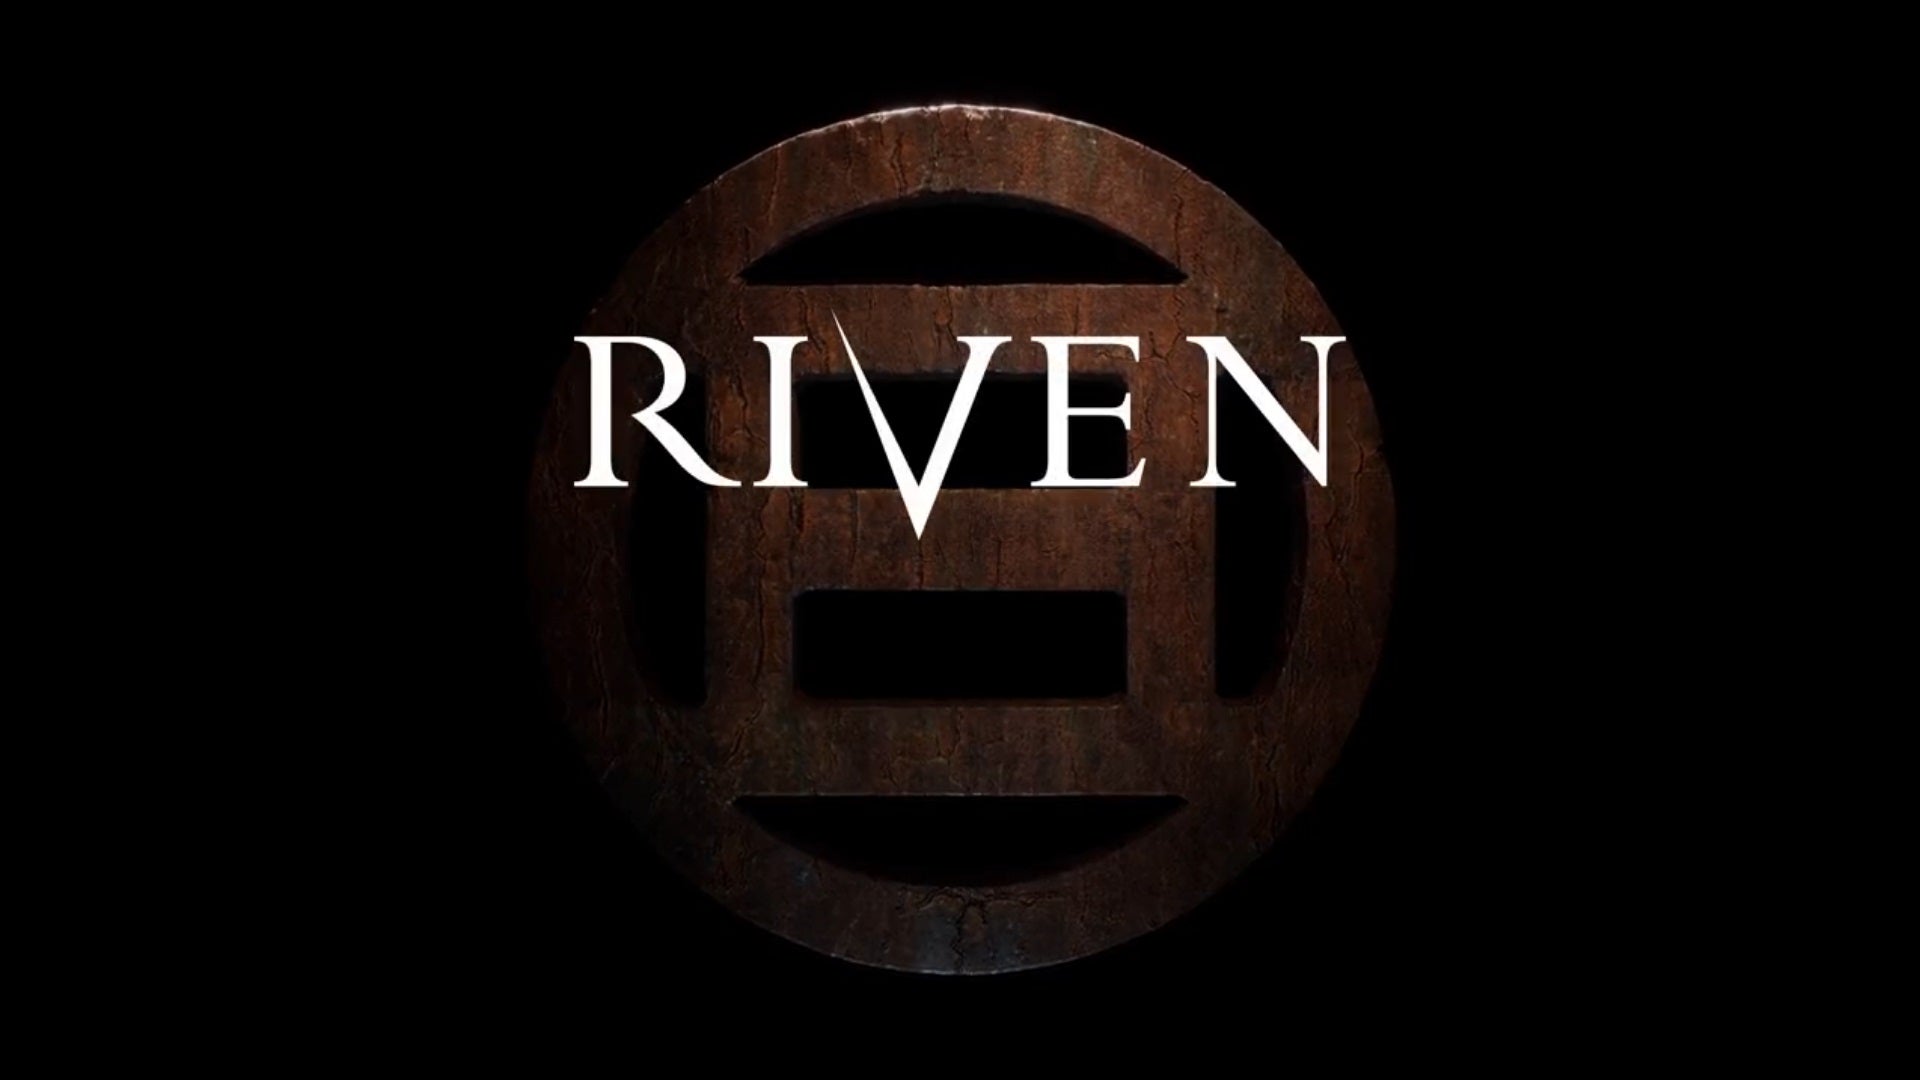 Riven remake screenshot from the announcement trailer.